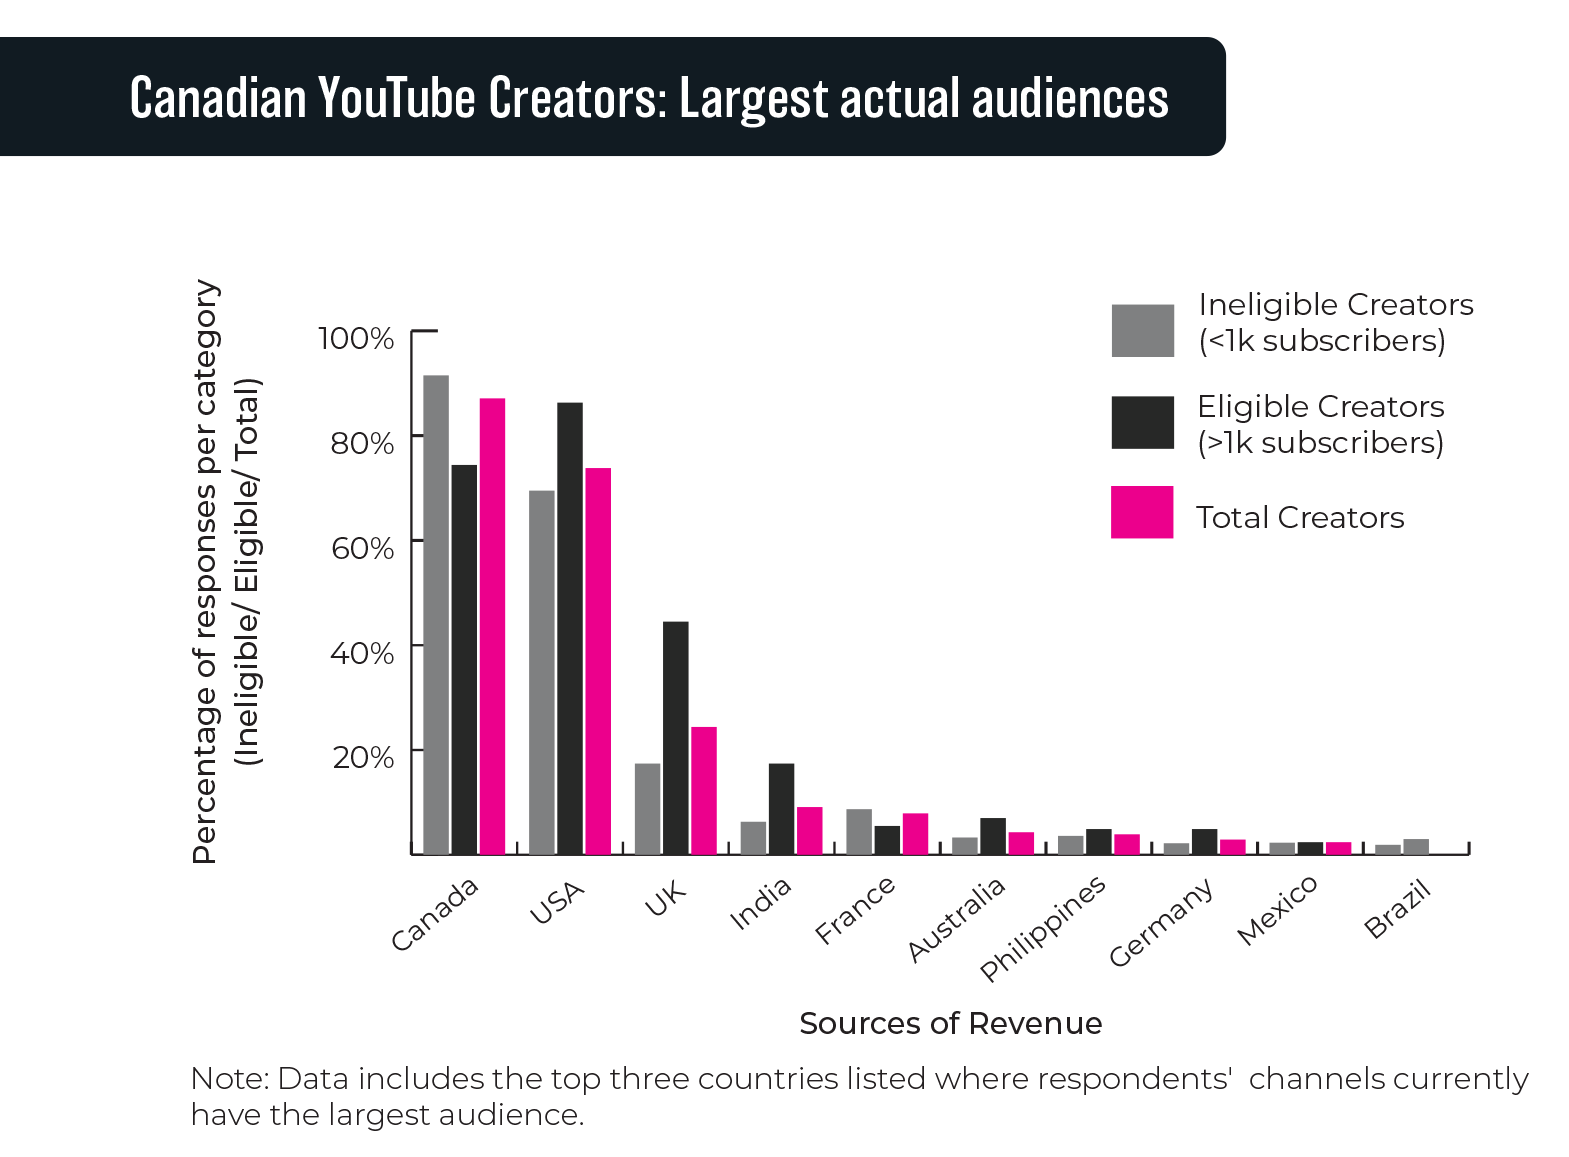 Figure 3.6: Canadian YouTube Creators: Largest actual audiences